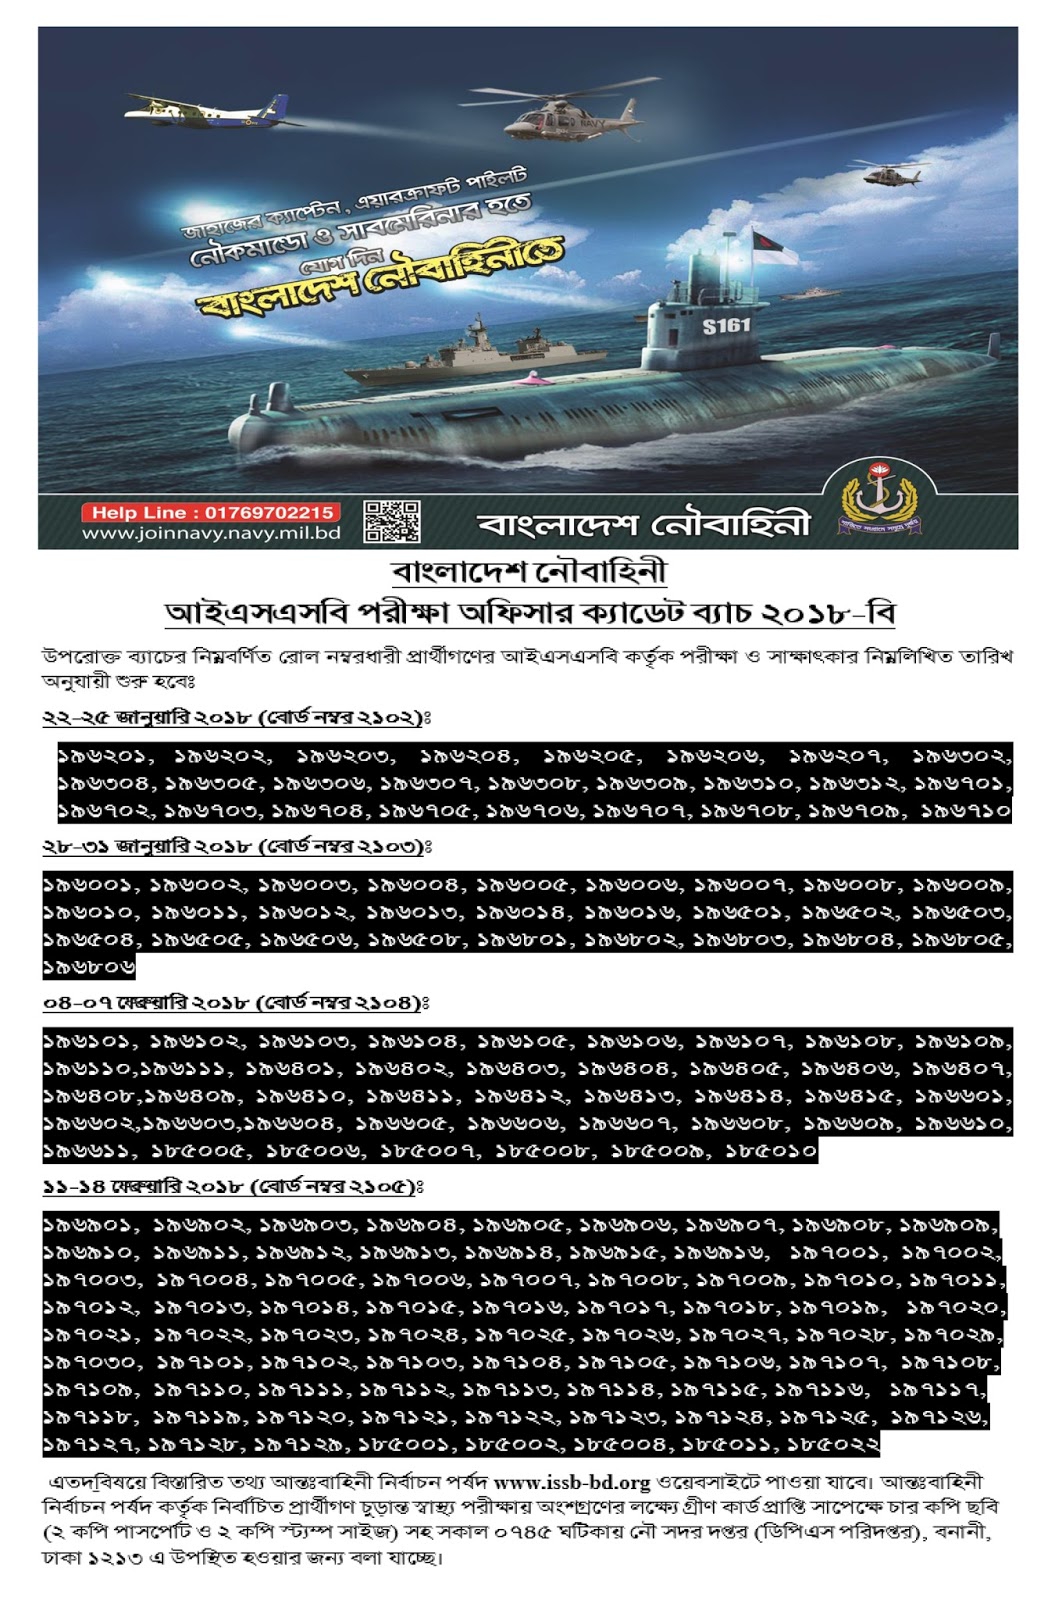 Bangladesh Navy 2018-B DEO Batch Written Test Result